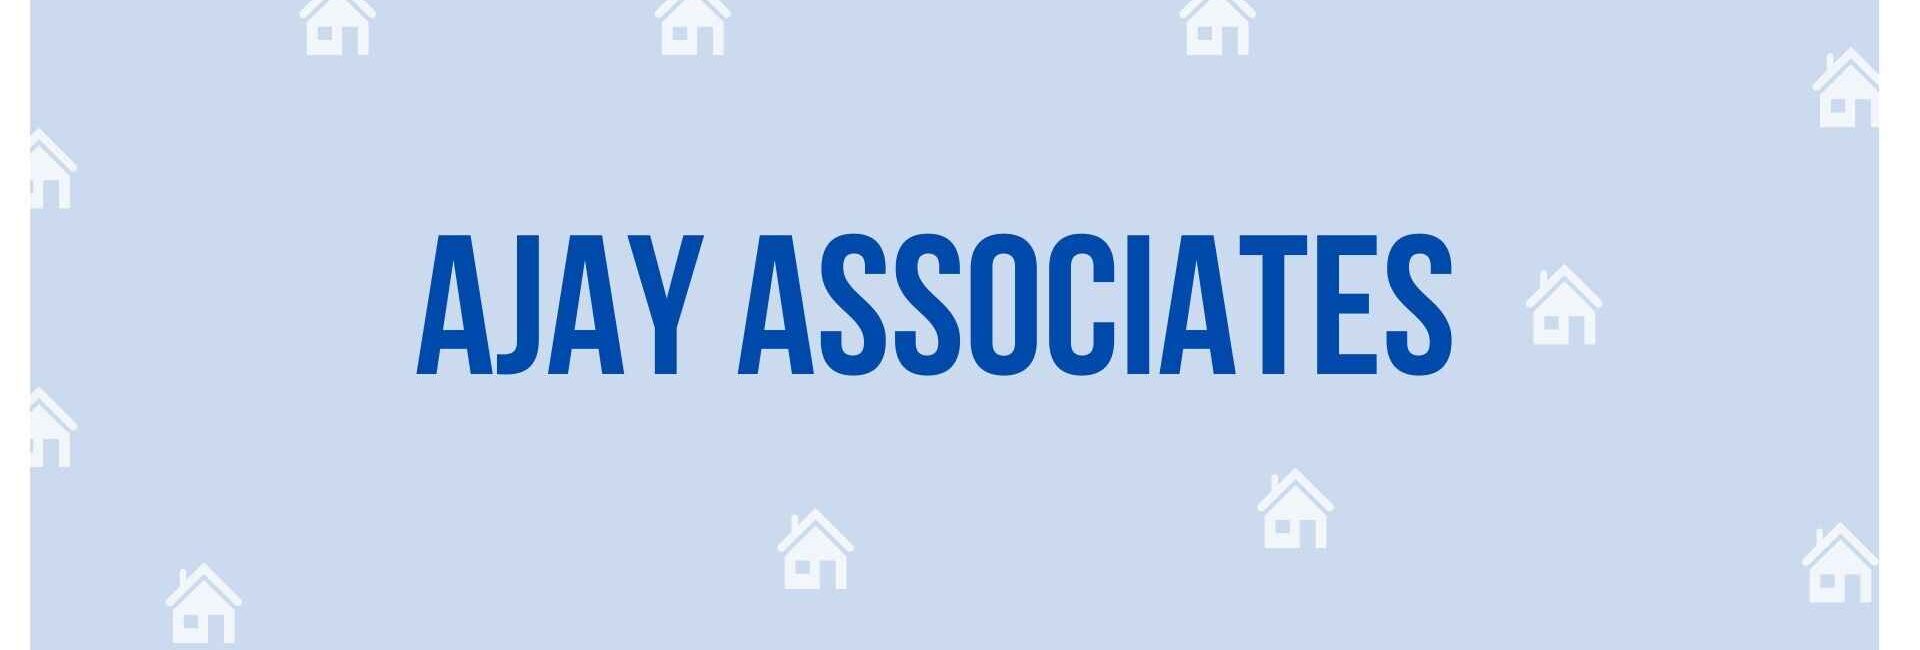 Ajay Associates - Property Dealer in Noida